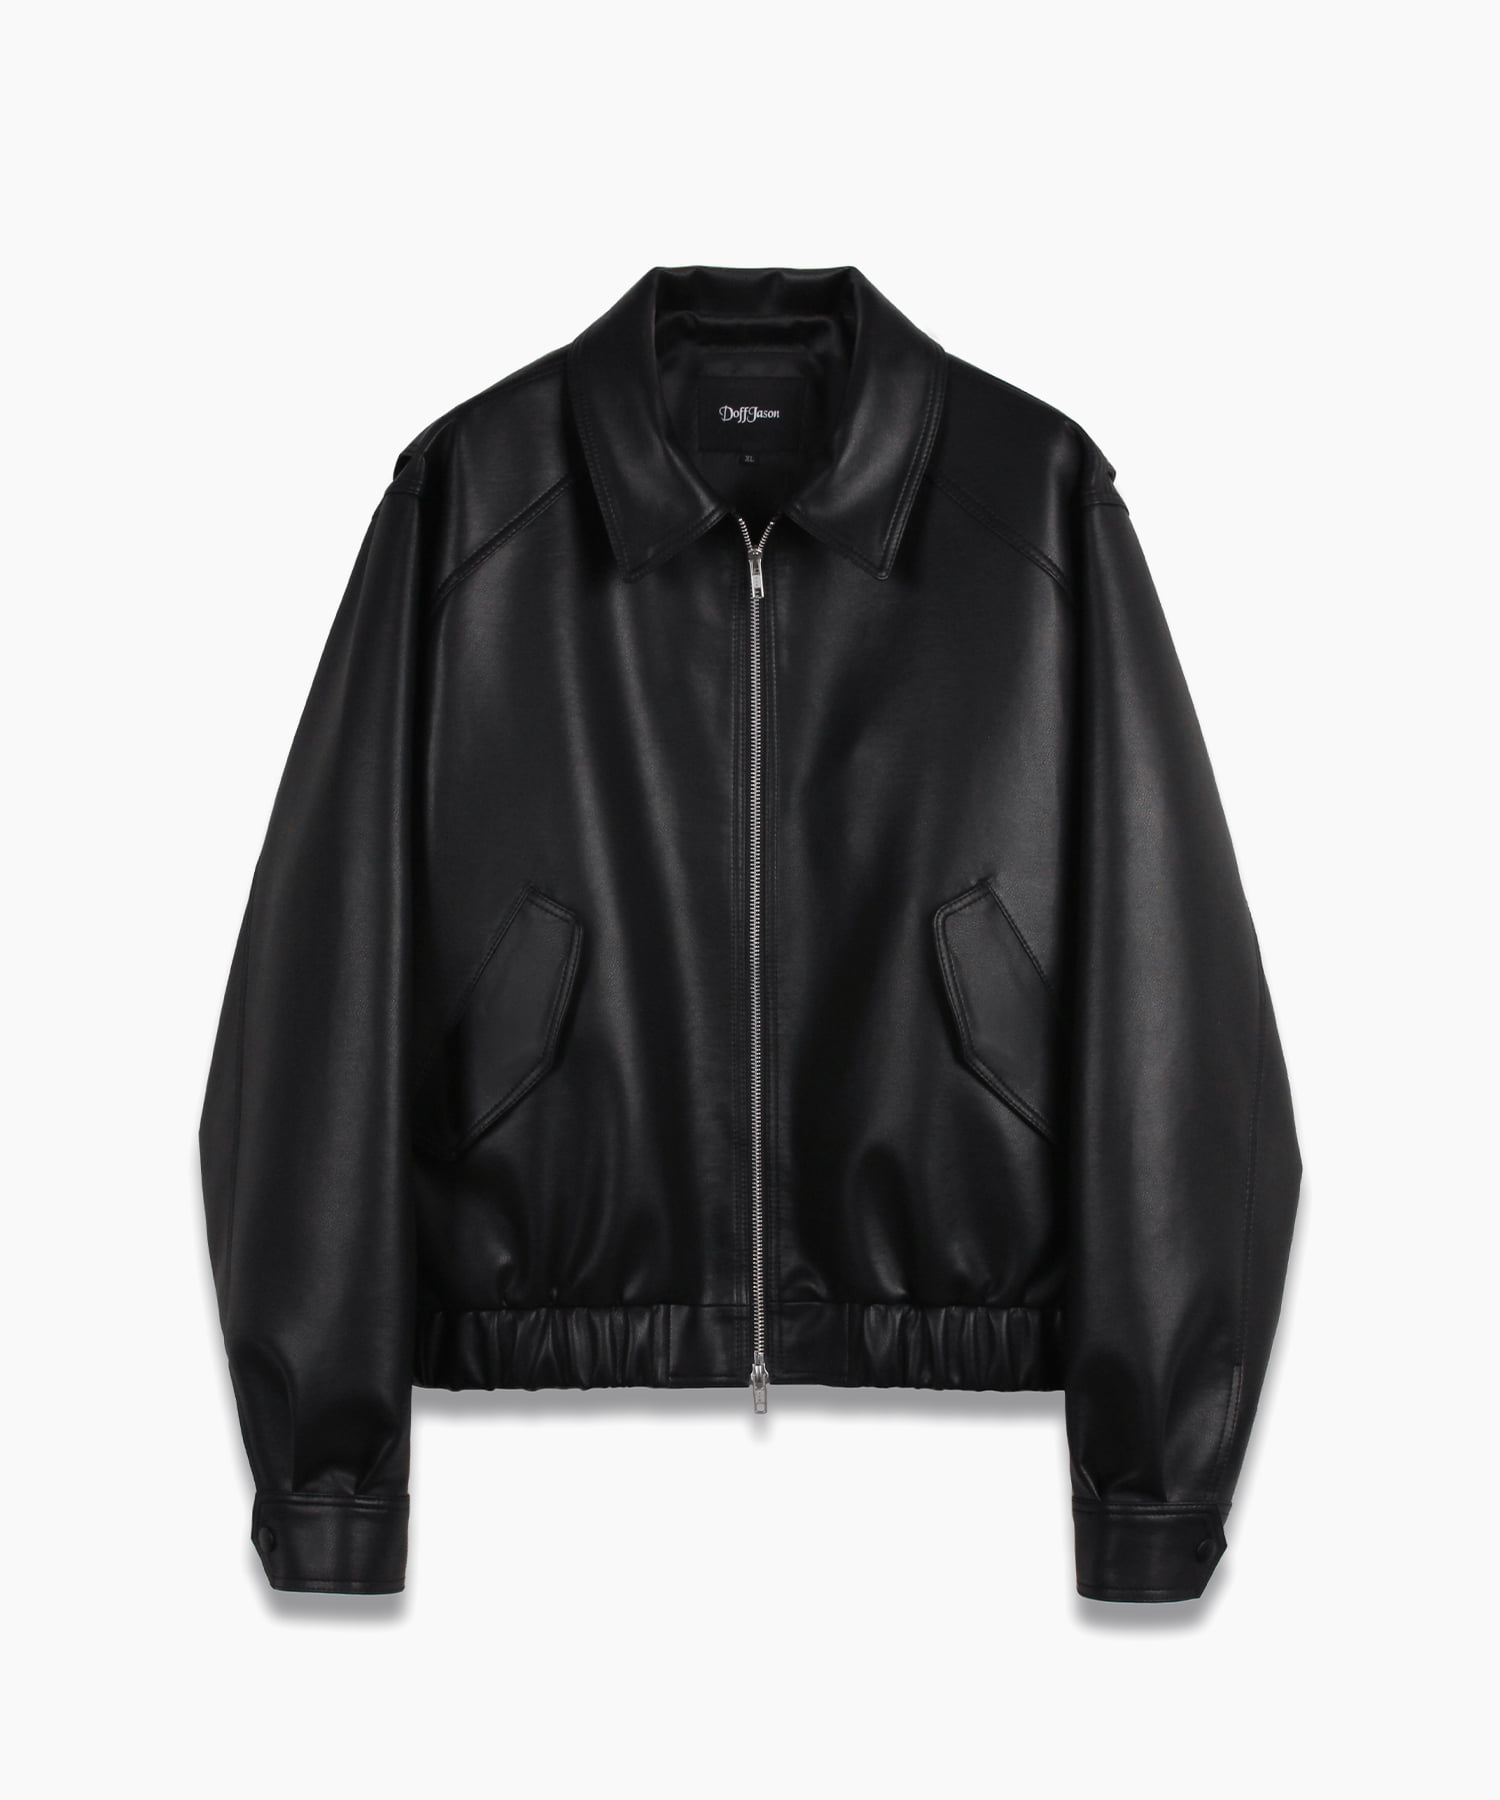 Overfit vegan leather bomber jacket